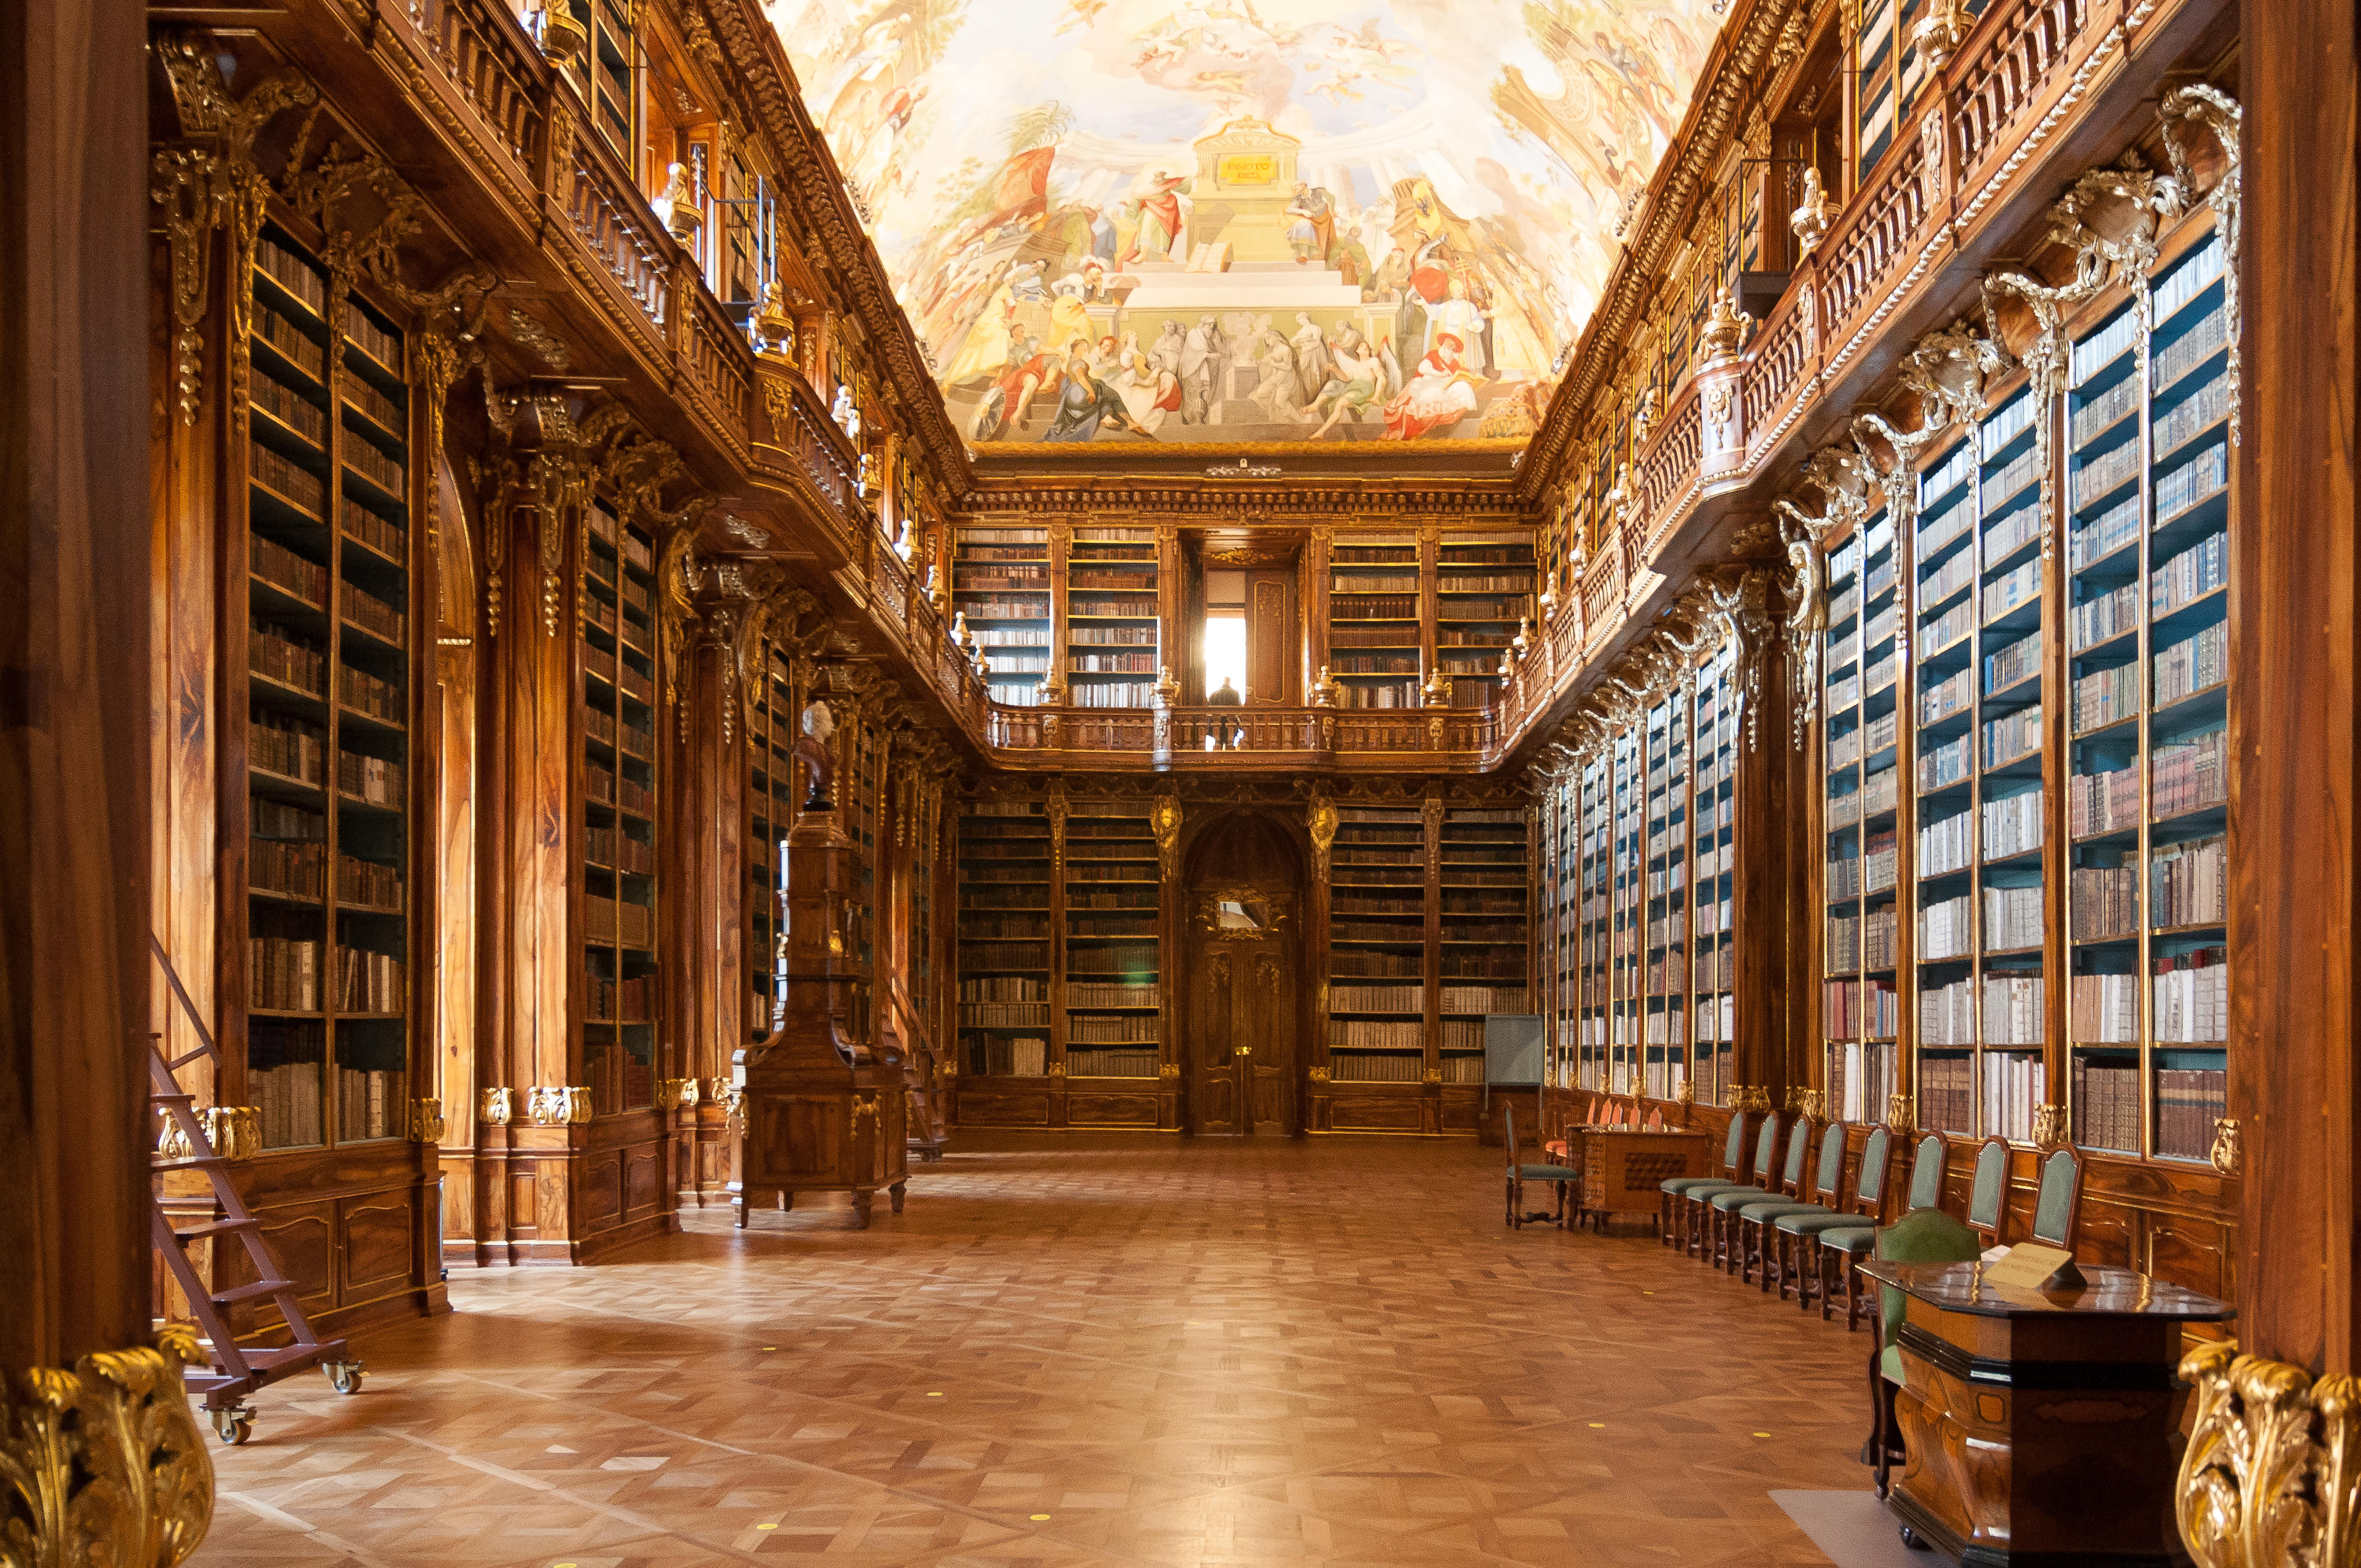 Visit the Strahov Library